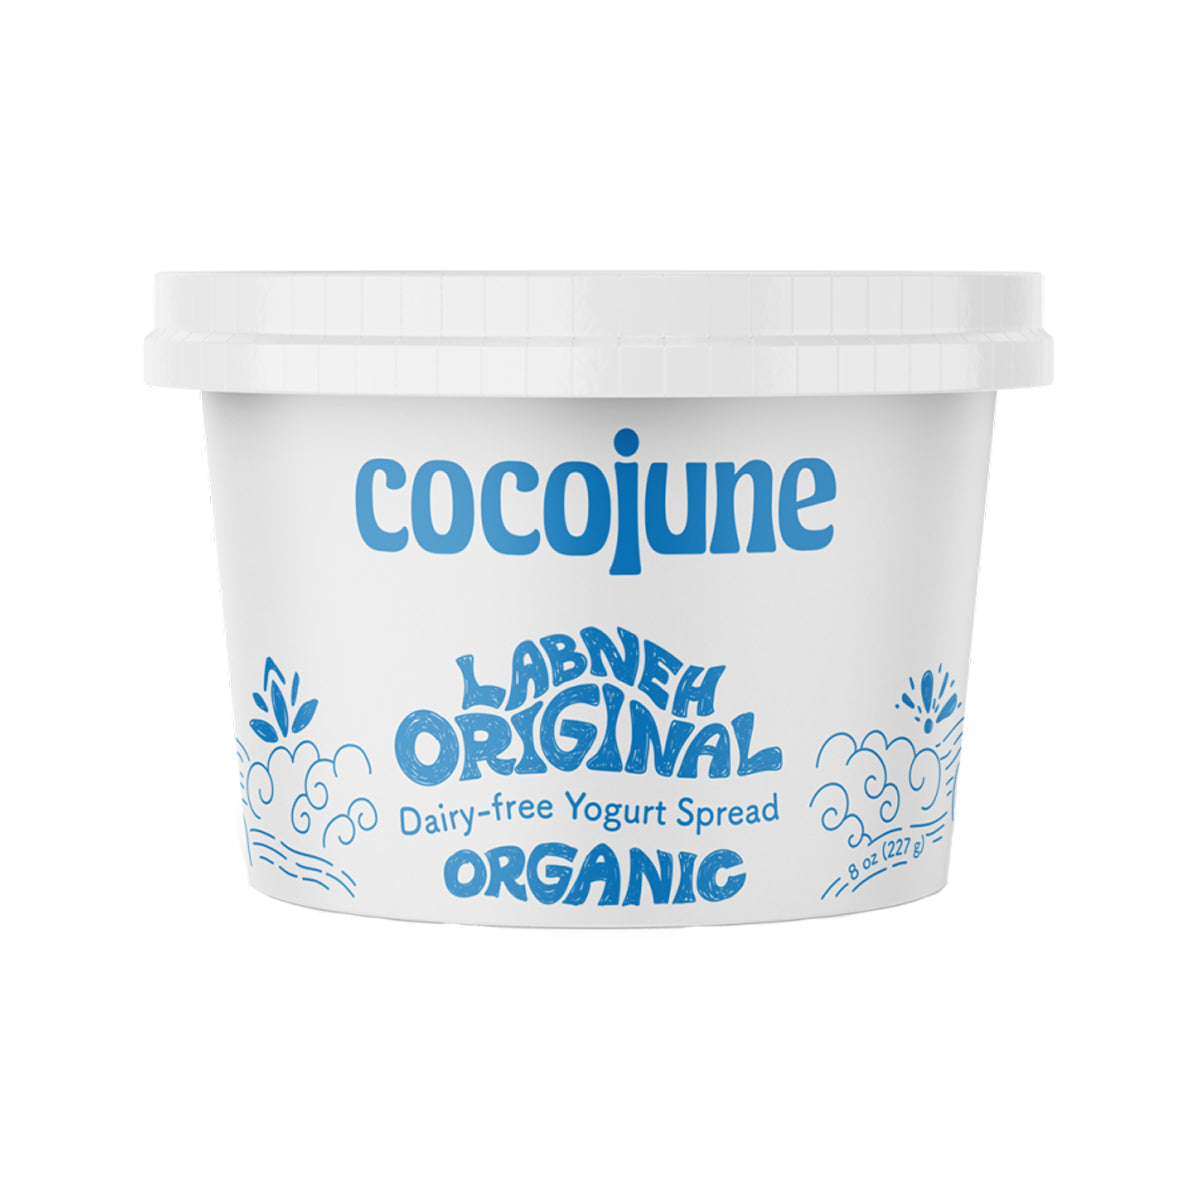 Cocojune Organic Vegan Coconut Labneh Original 8 OZ